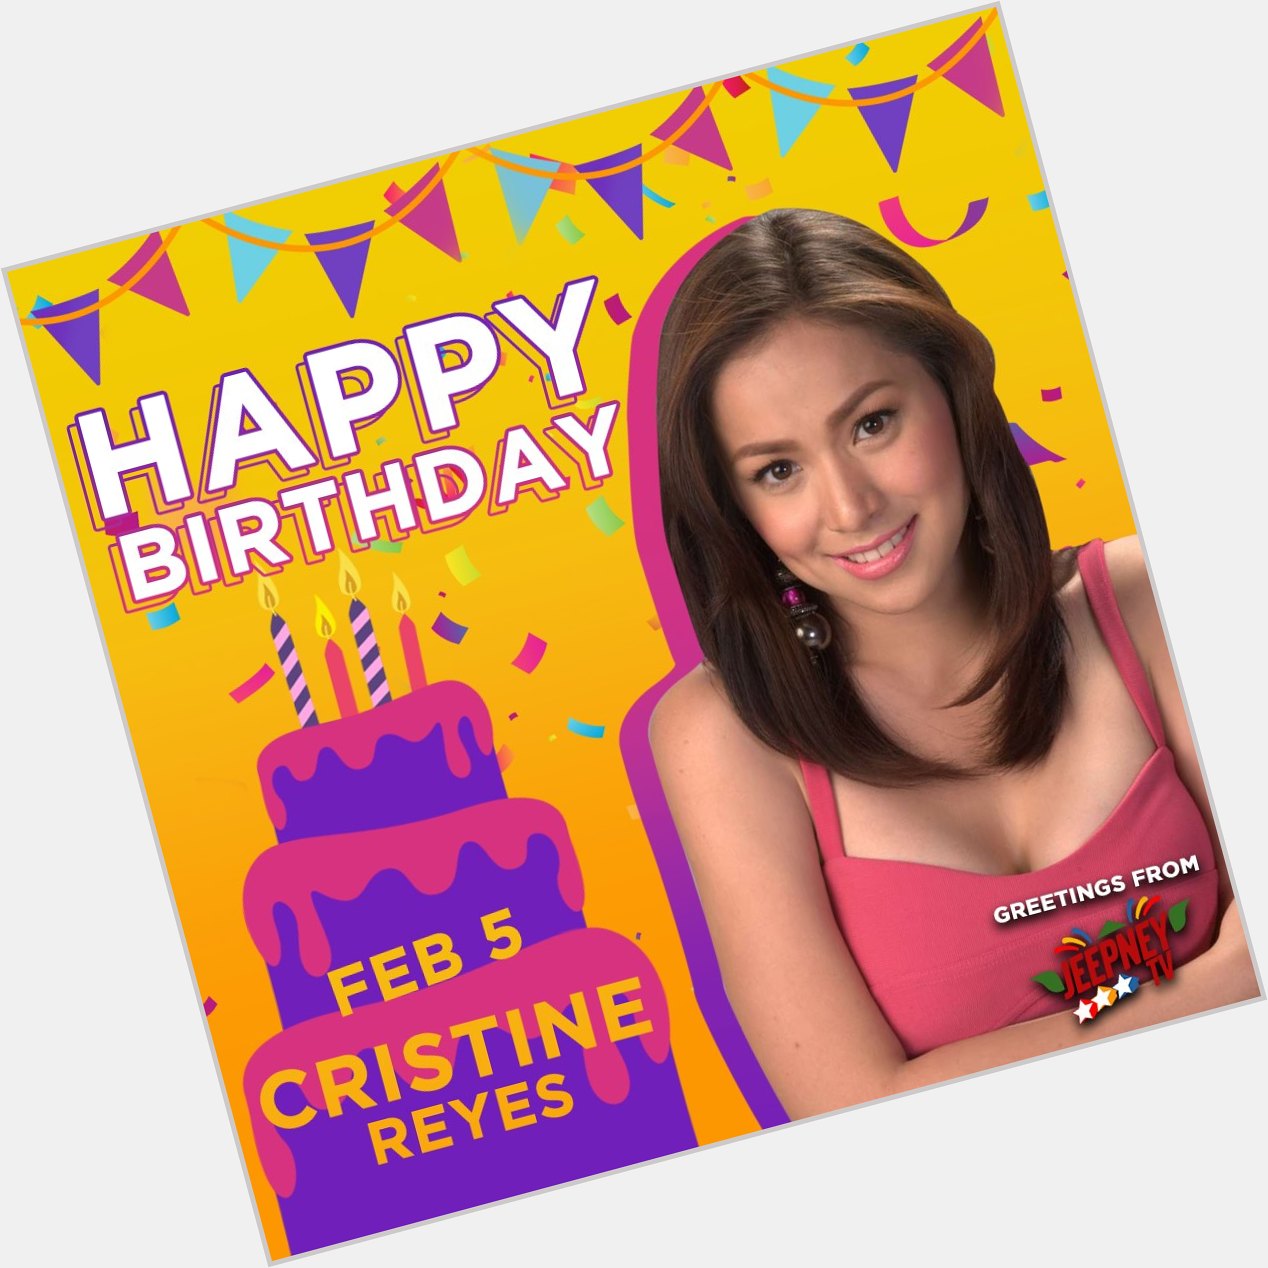 Happy birthday Cristine Reyes!  Greetings from Jeepney TV 